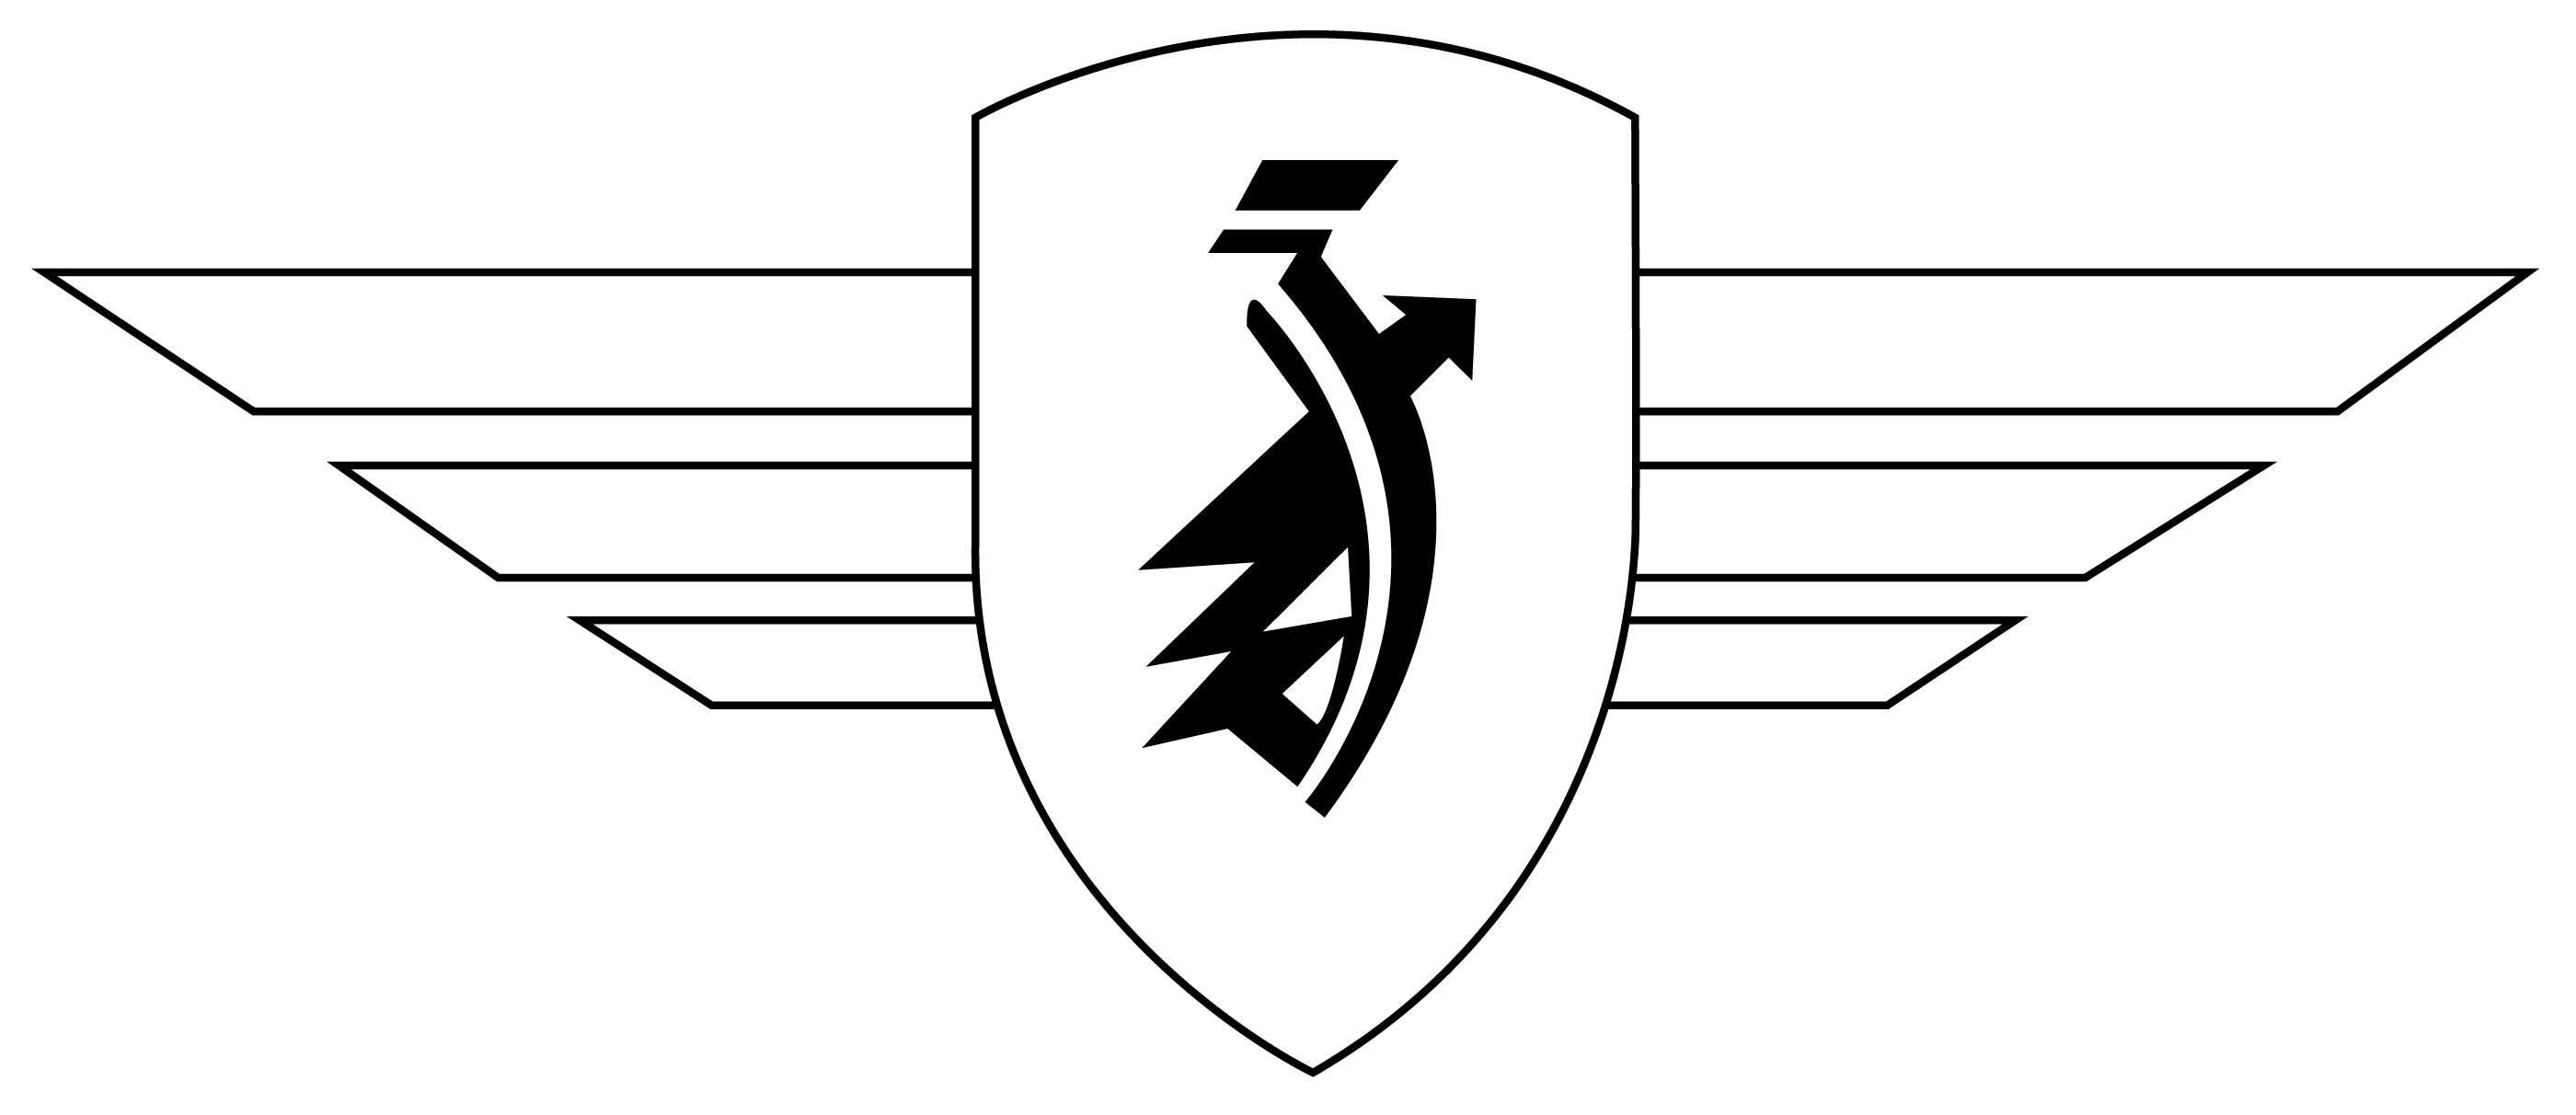 Emblem Zündapp glänzend silberfarbig Feld grau Zeichen Marke Symbol Sammler 